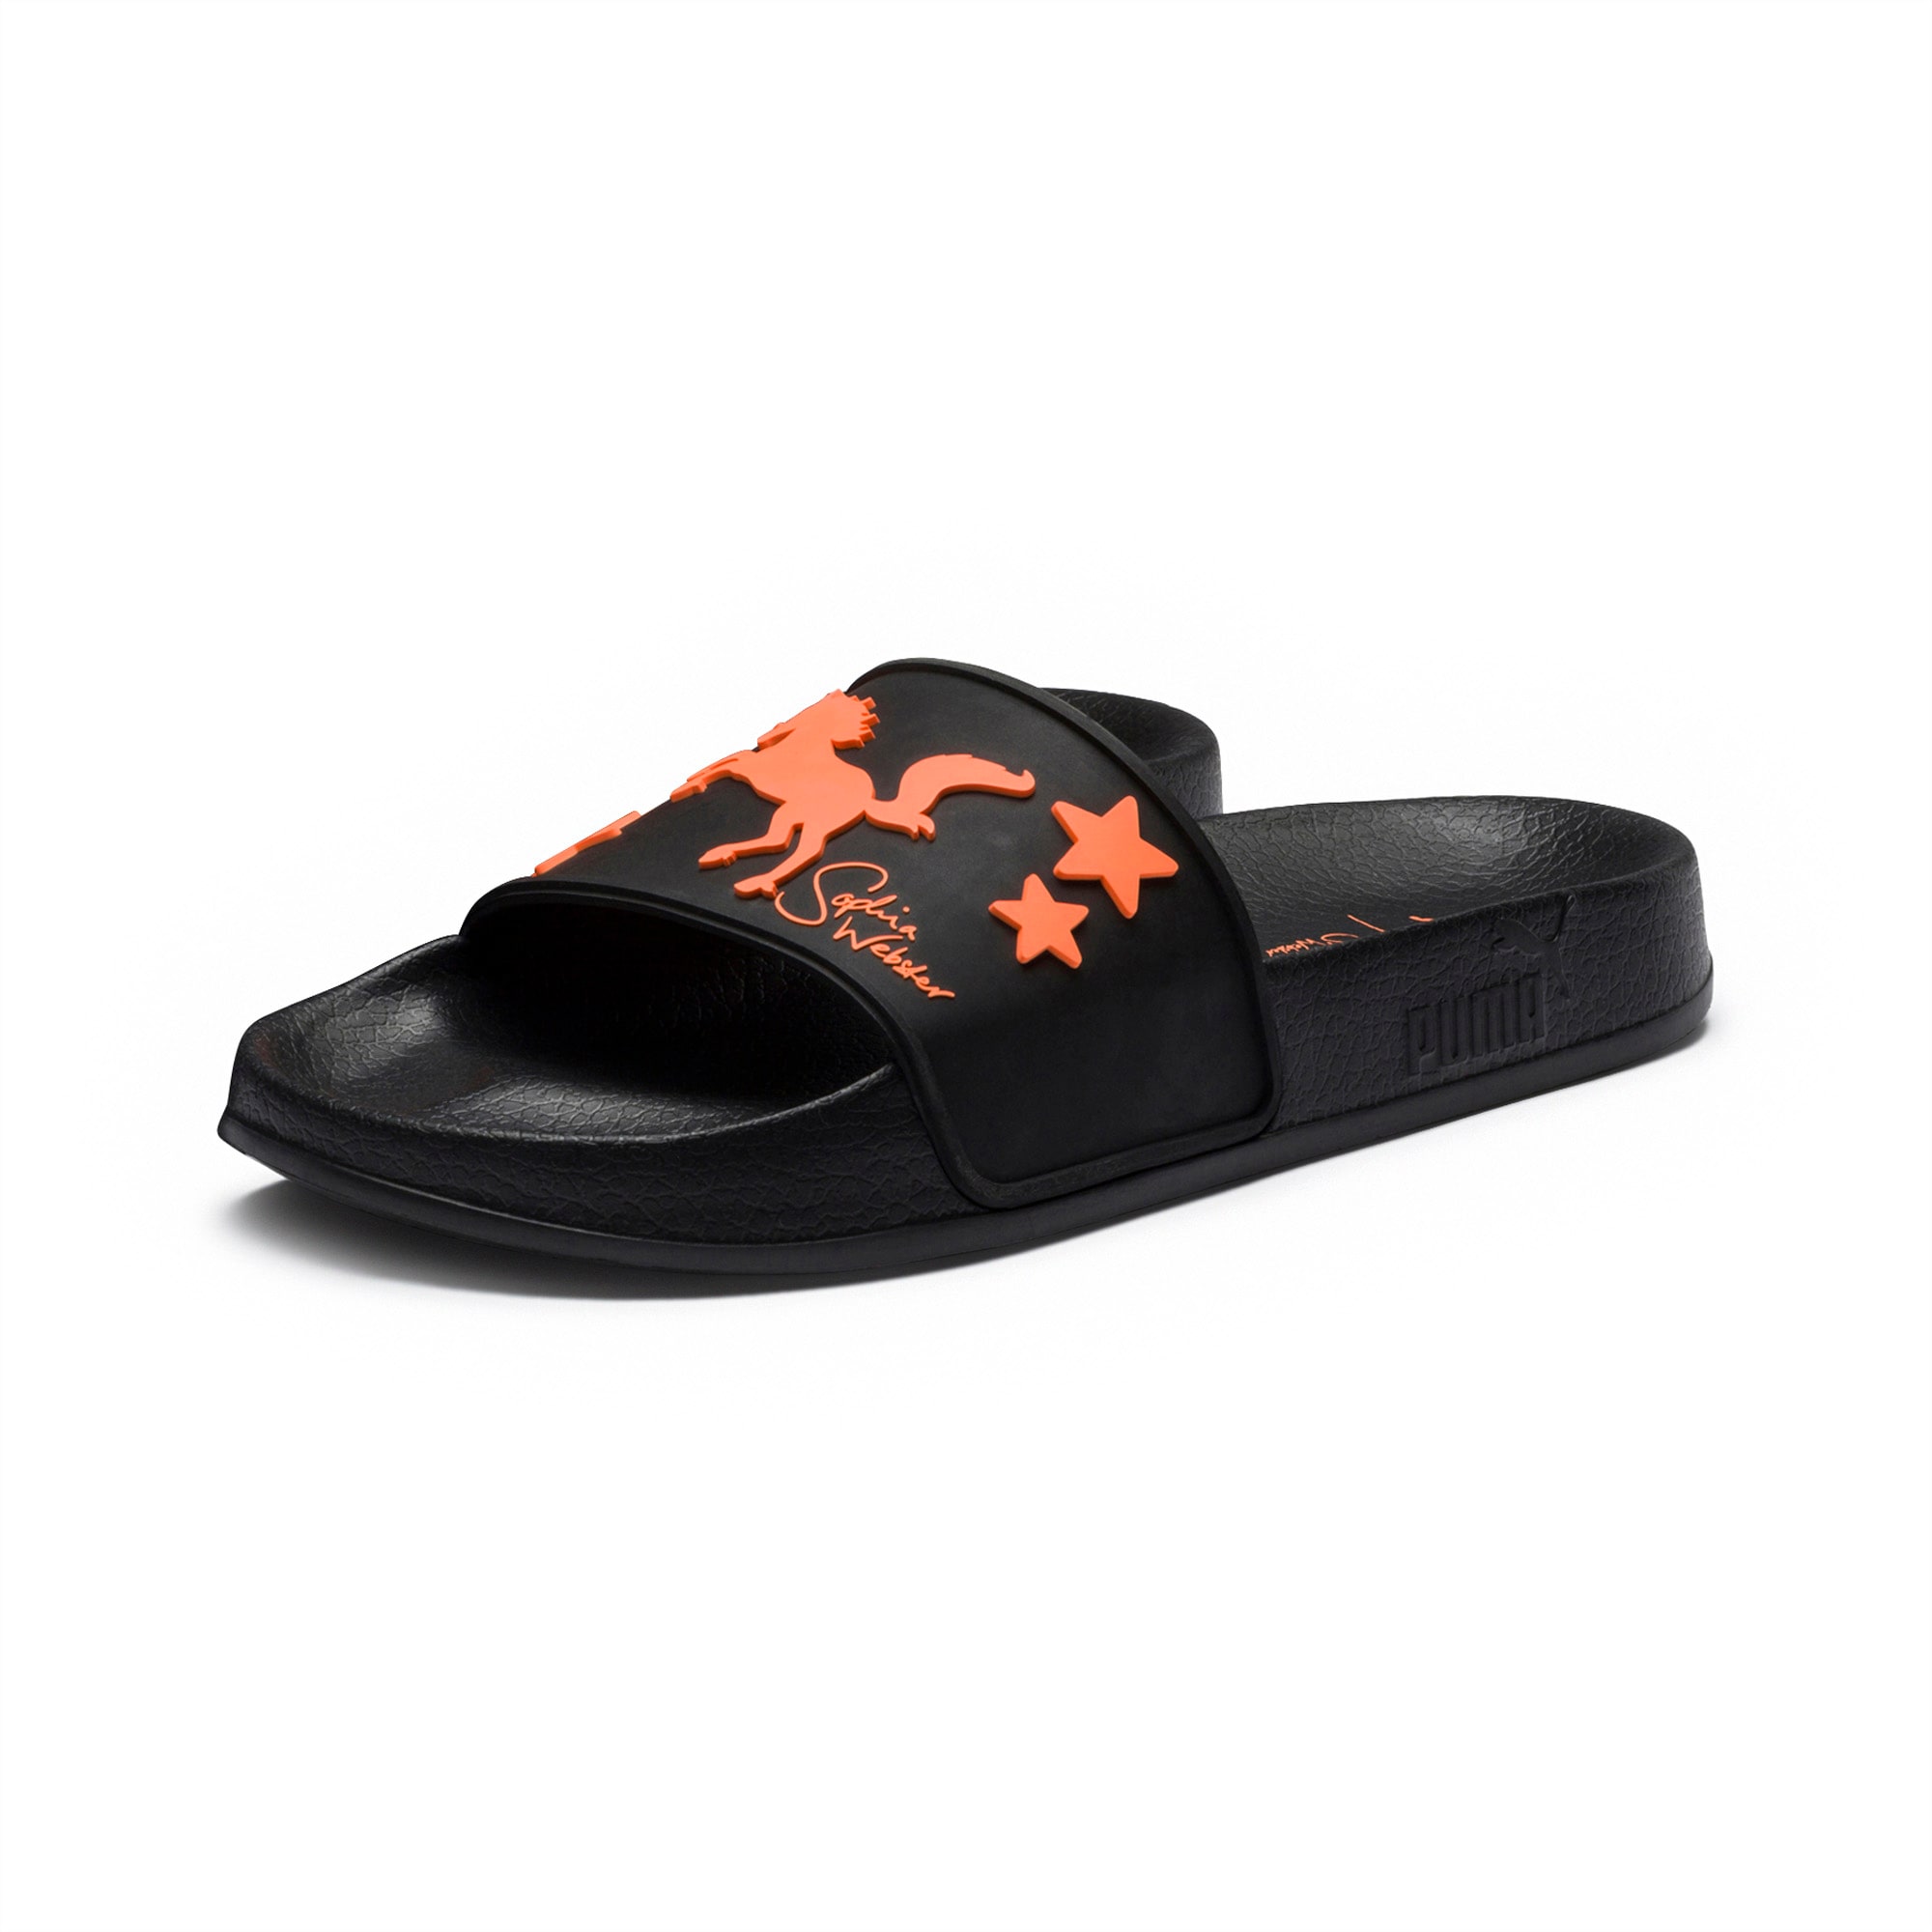 puma webster slippers